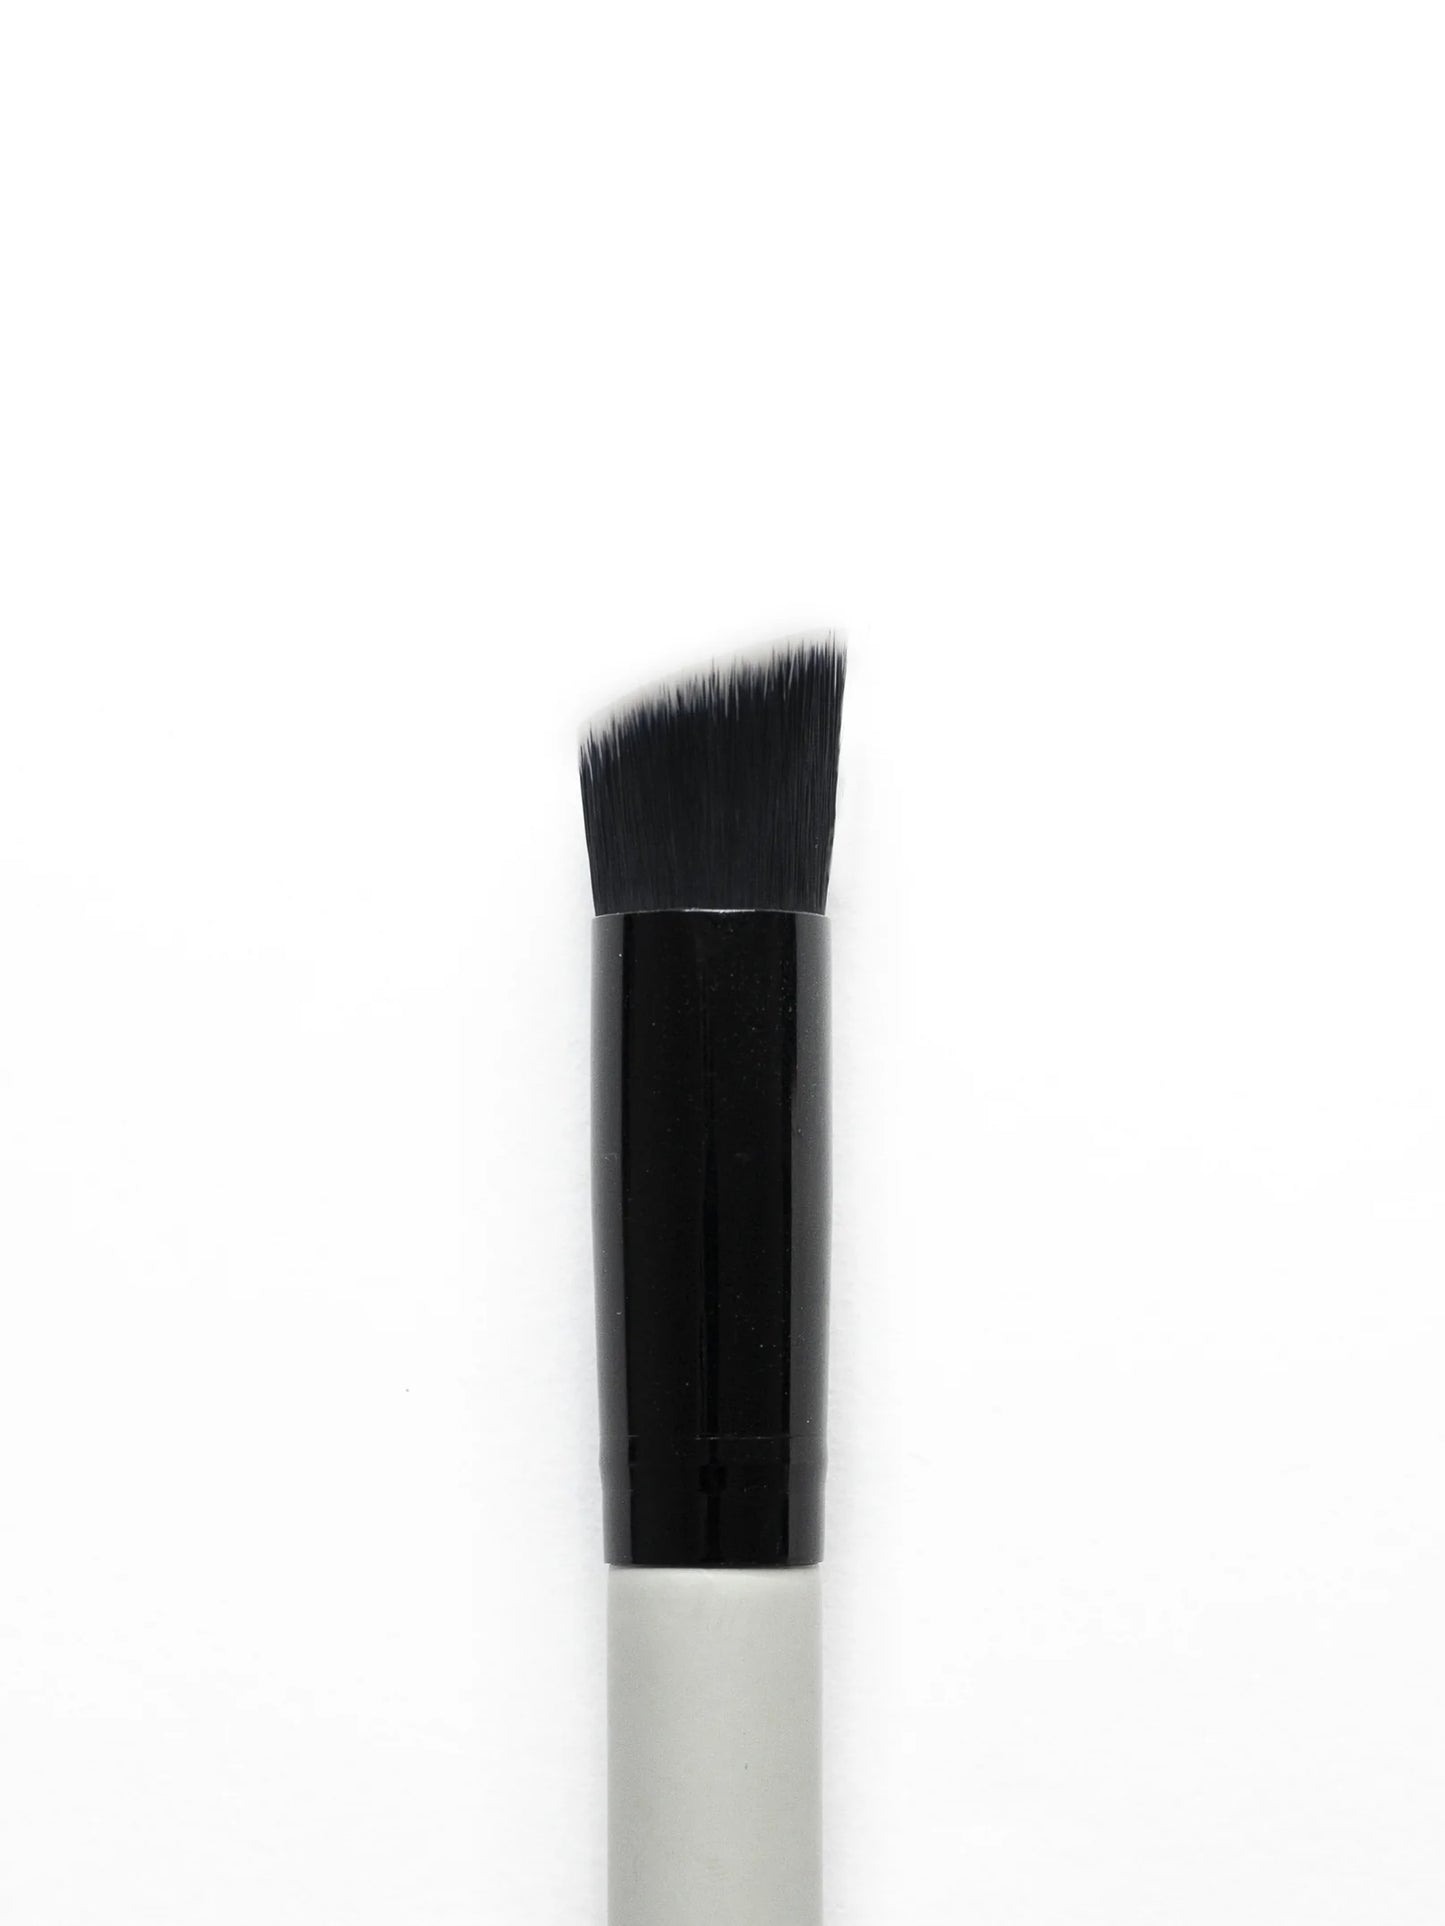 Detailed Foundation / Concealer Brush 34 Make-up Brush EDY LONDON Cool Grey   - EDY LONDON PRODUCTS UK - The Best Makeup Brushes - shop.edy.london